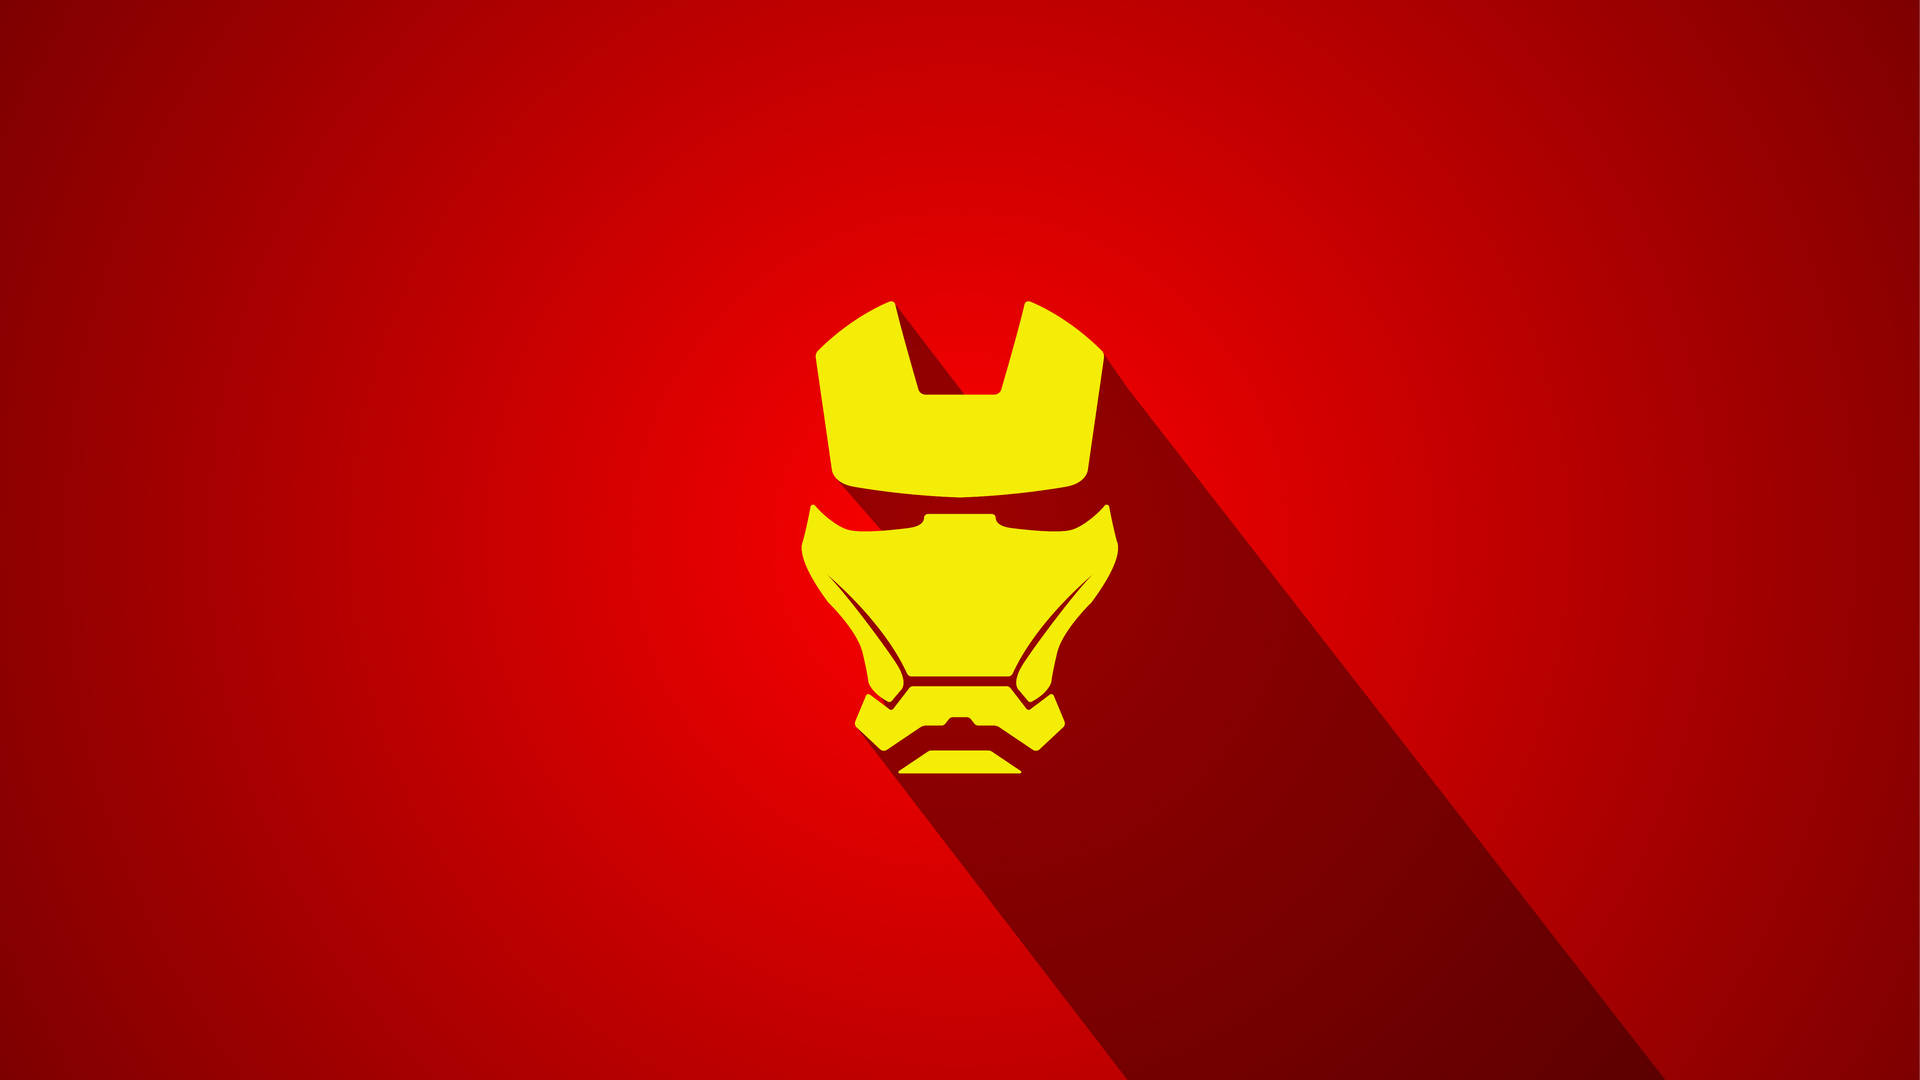 Cool Iron Man Mask Casting Shadow Wallpaper